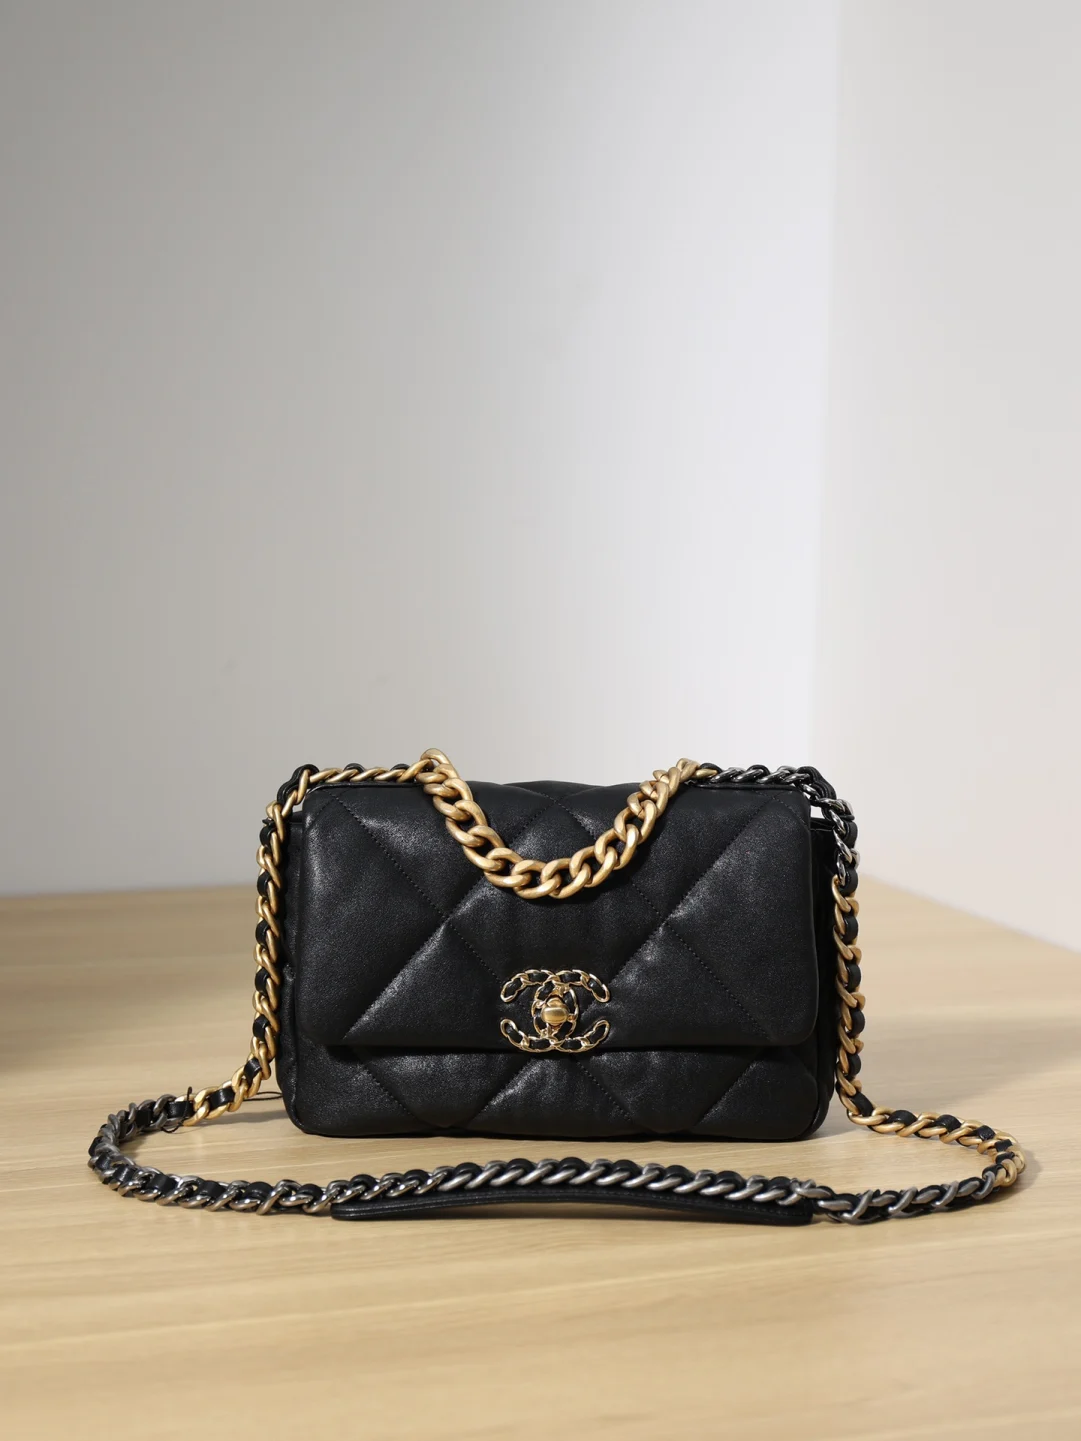 Replica Chanel CF 19 Black Handbag